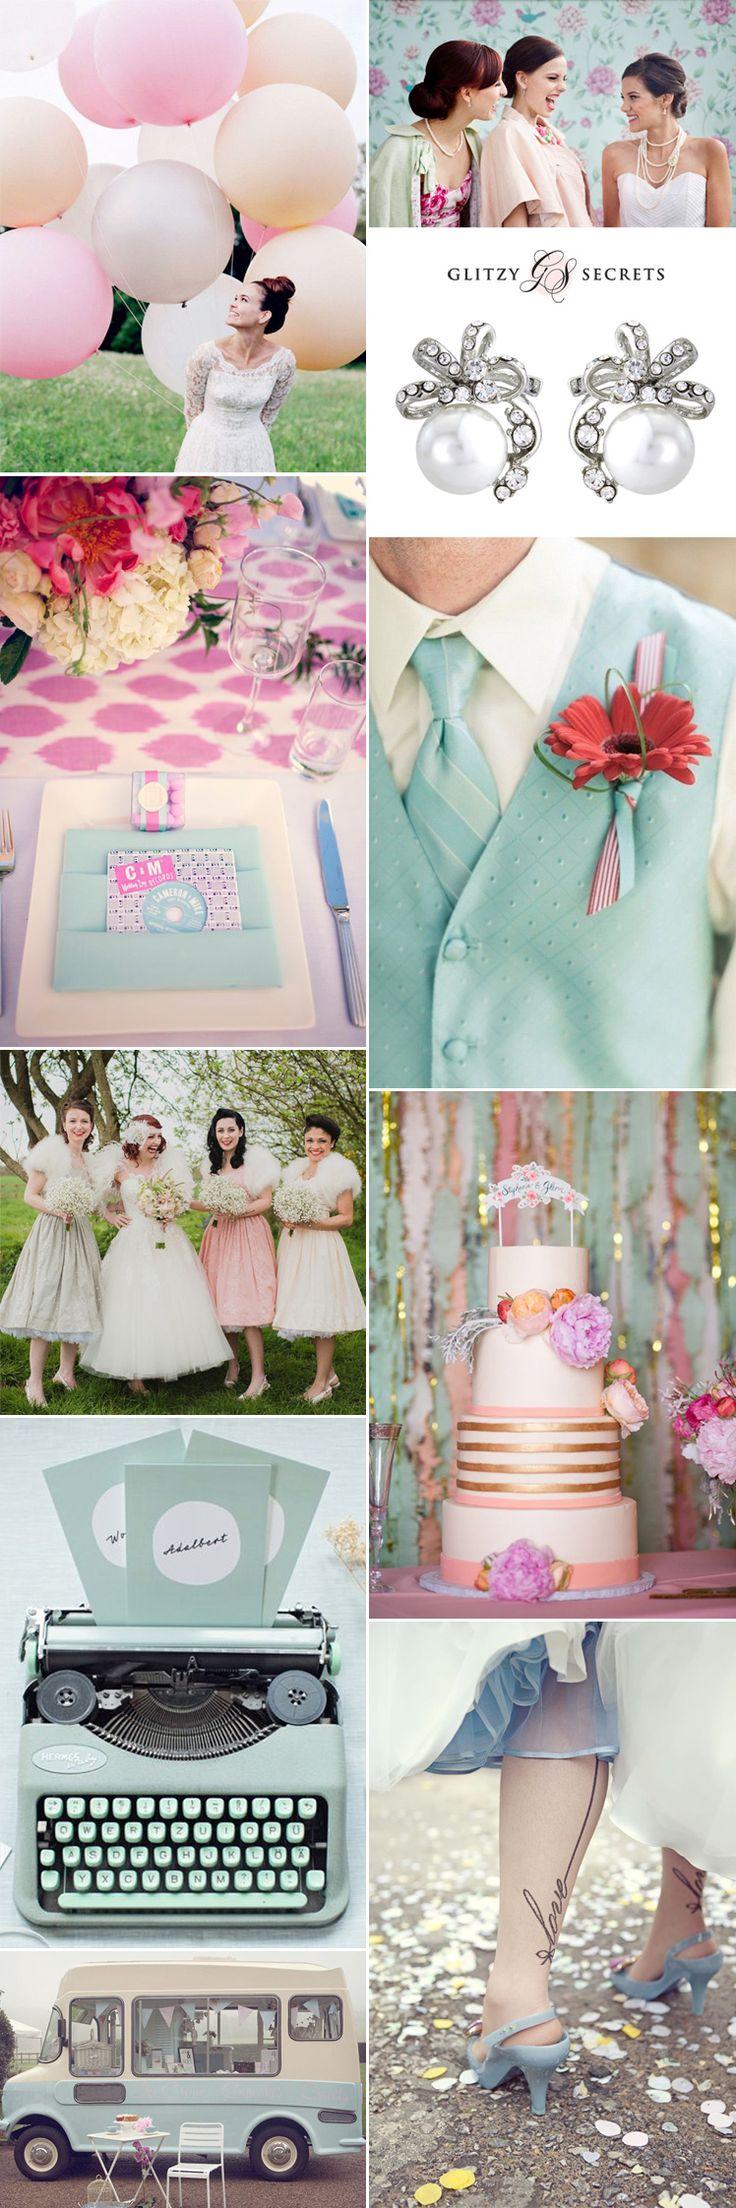 زفاف - Pastels And Petticoats: 1950s Wedding Ideas